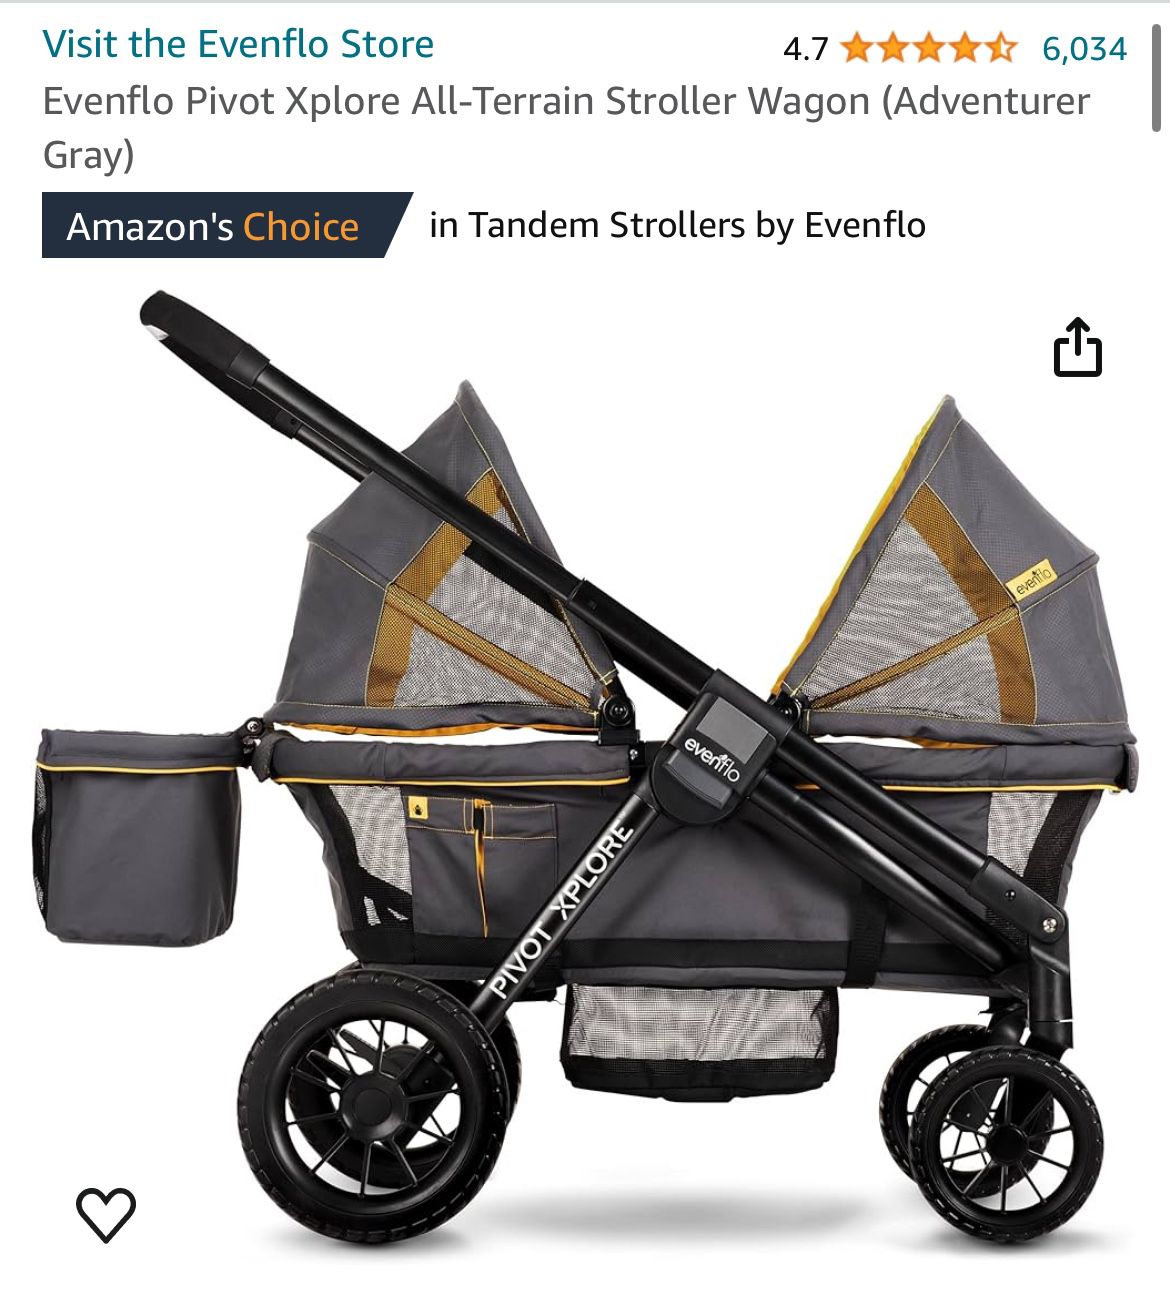 Evenflo Pivot Xplore All-Terrain Stroller Wagon with infant carrier